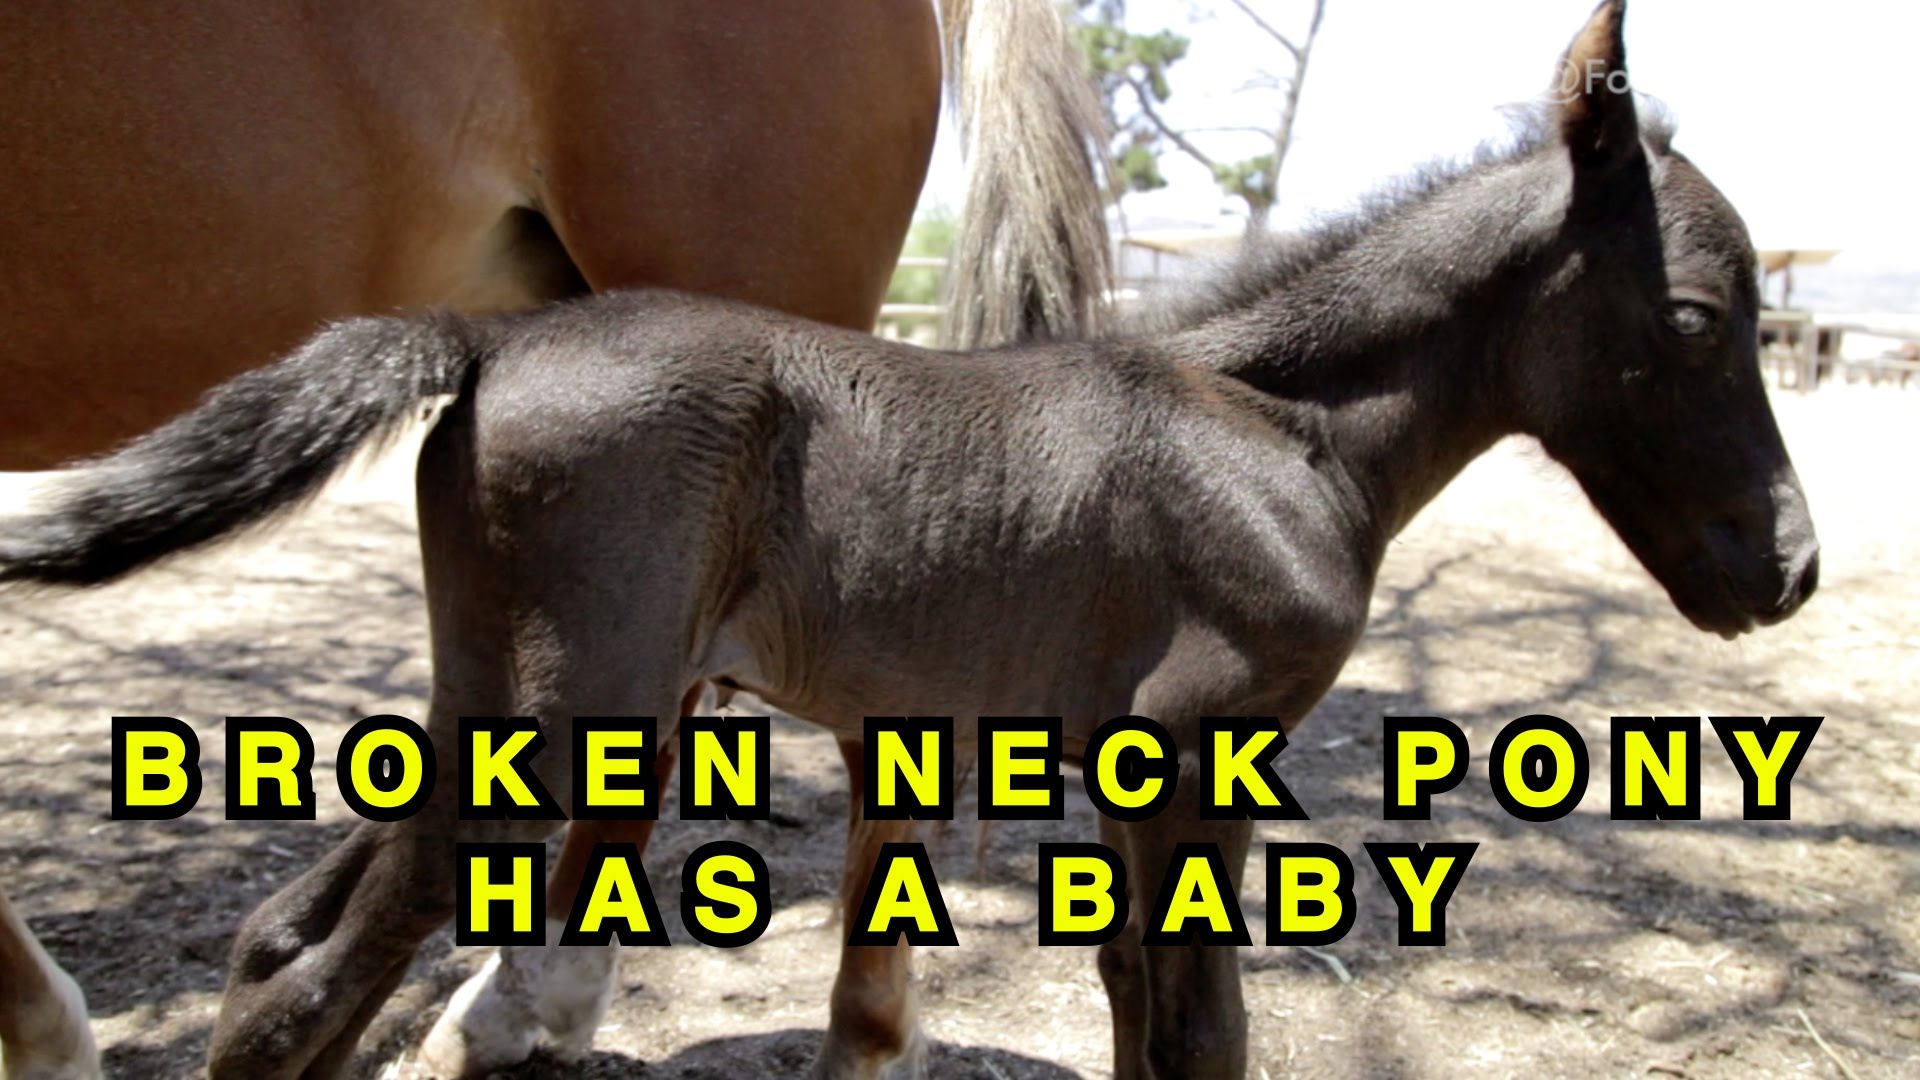 Pony with Broken Neck Has a Baby